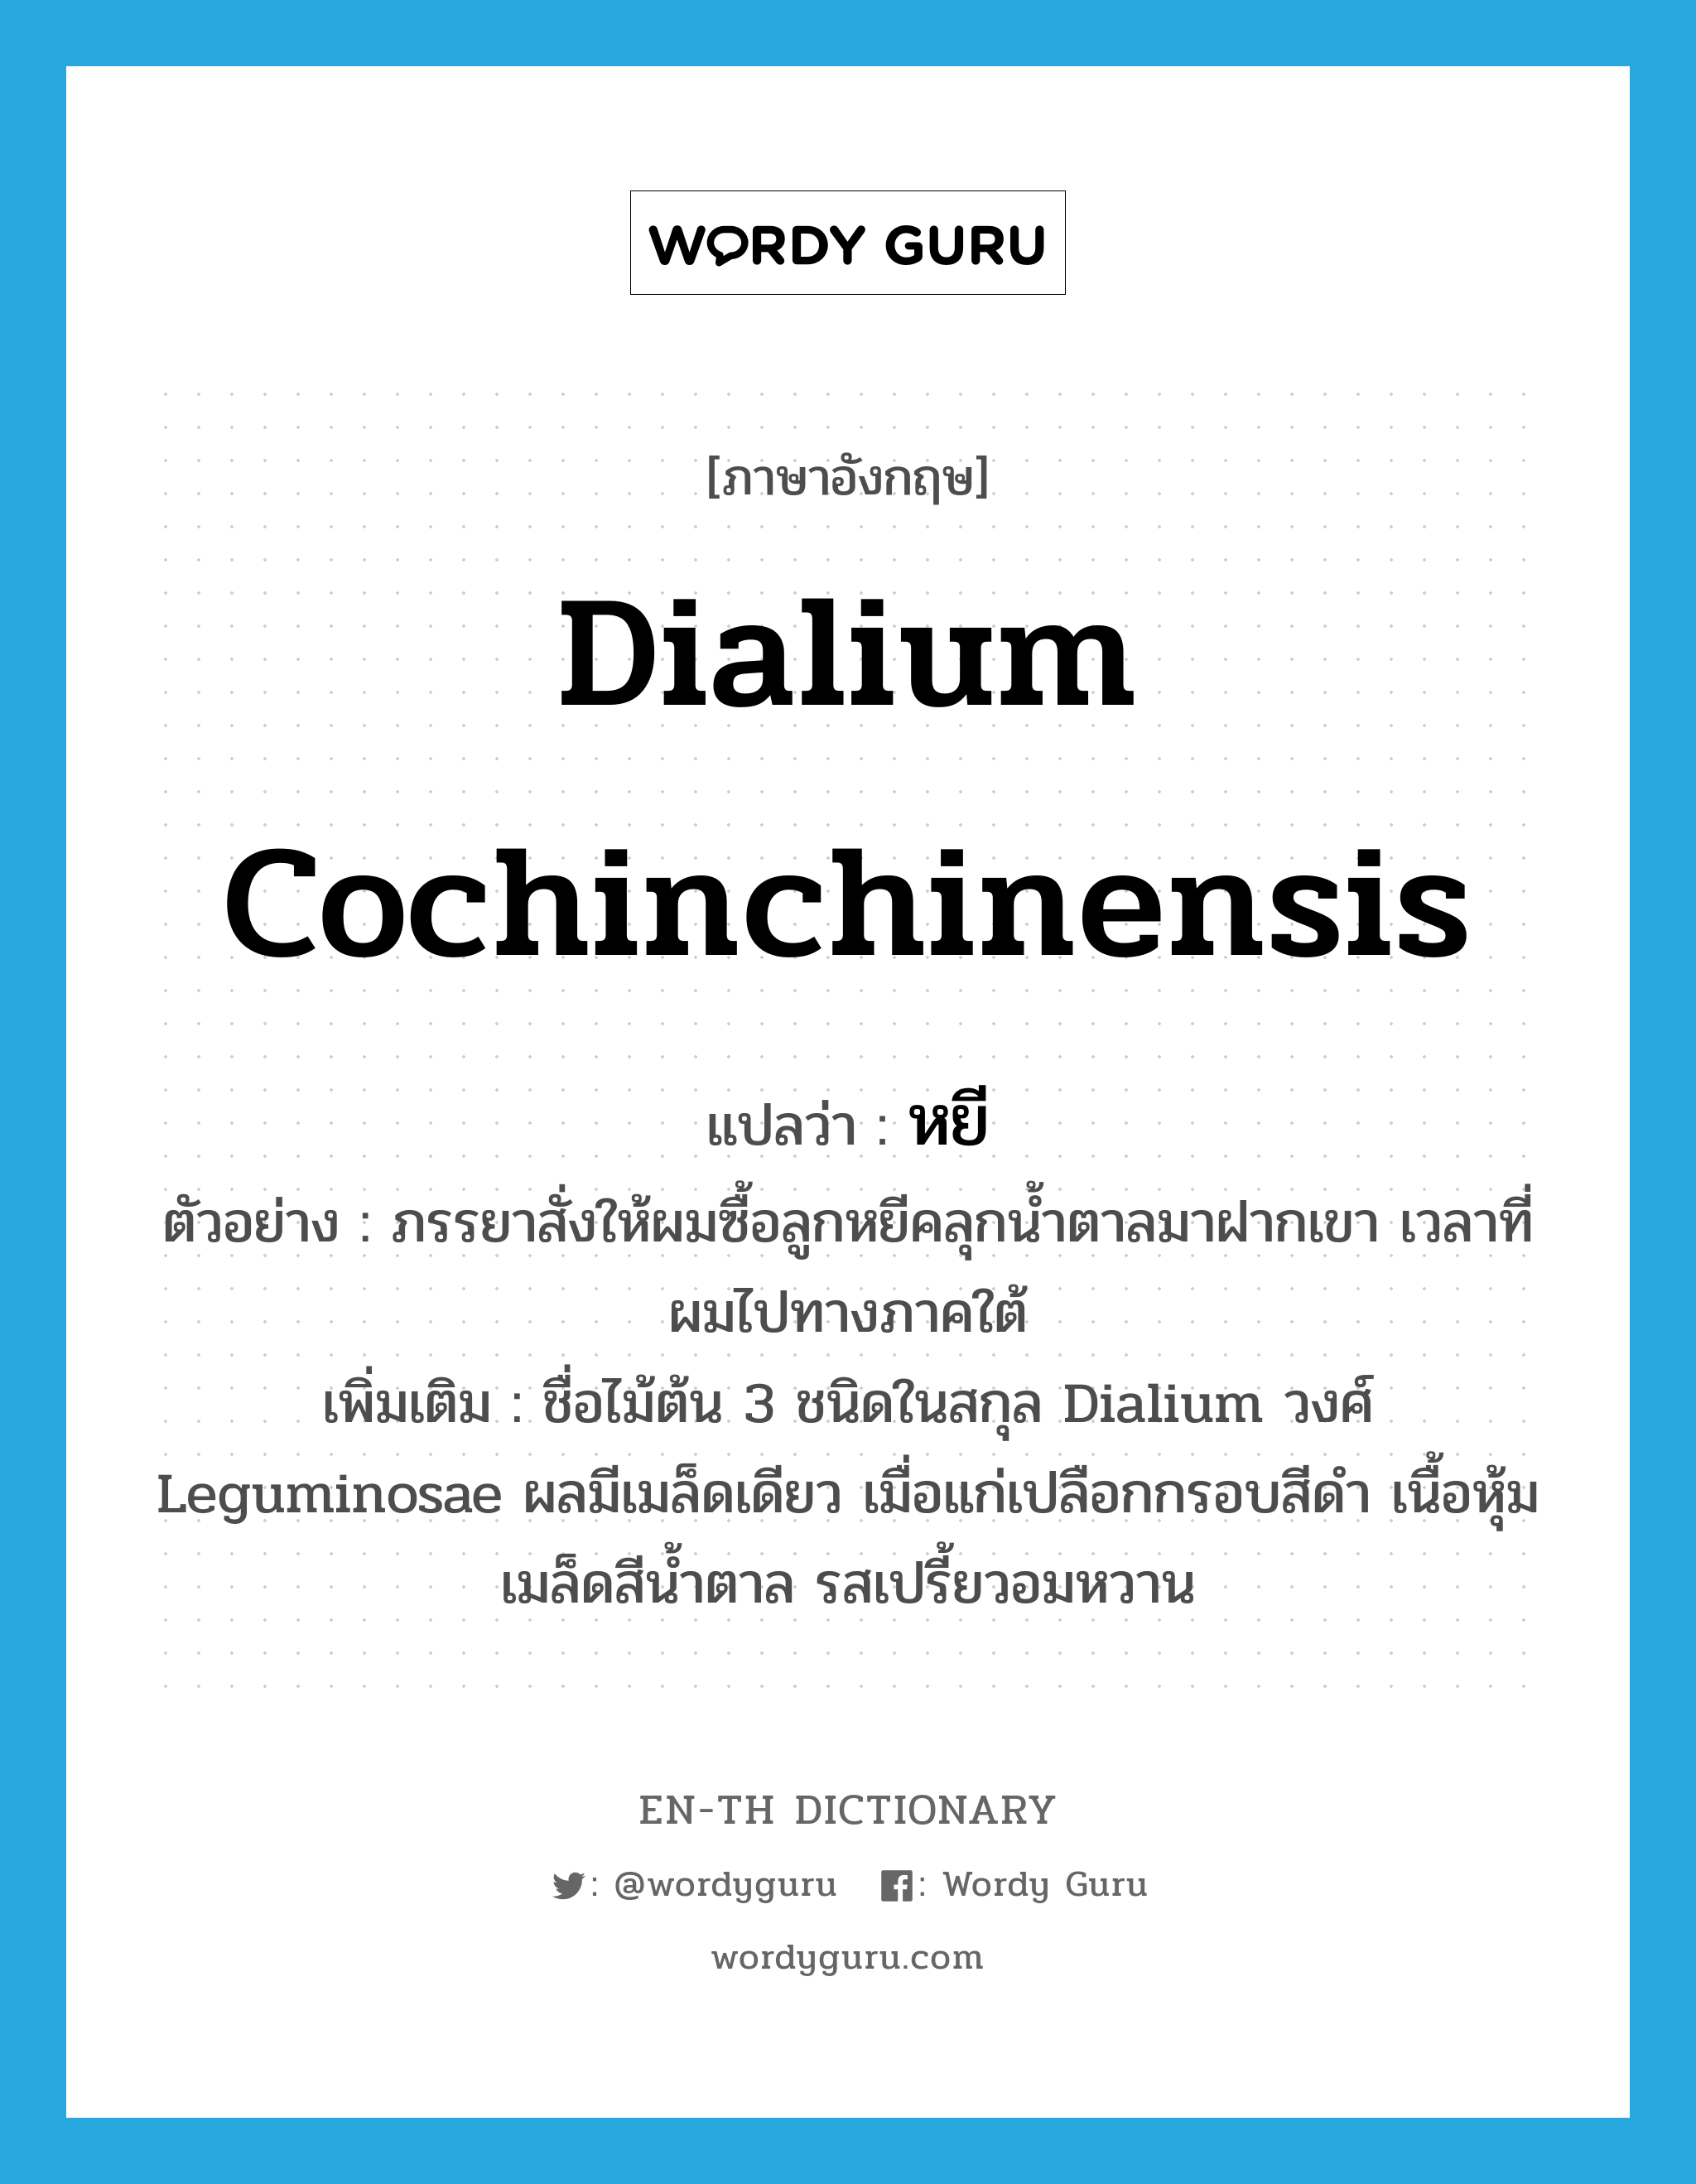 Dialium cochinchinensis แปลว่า?, คำศัพท์ภาษาอังกฤษ Dialium cochinchinensis แปลว่า หยี ประเภท N ตัวอย่าง ภรรยาสั่งให้ผมซื้อลูกหยีคลุกน้ำตาลมาฝากเขา เวลาที่ผมไปทางภาคใต้ เพิ่มเติม ชื่อไม้ต้น 3 ชนิดในสกุล Dialium วงศ์ Leguminosae ผลมีเมล็ดเดียว เมื่อแก่เปลือกกรอบสีดำ เนื้อหุ้มเมล็ดสีน้ำตาล รสเปรี้ยวอมหวาน หมวด N